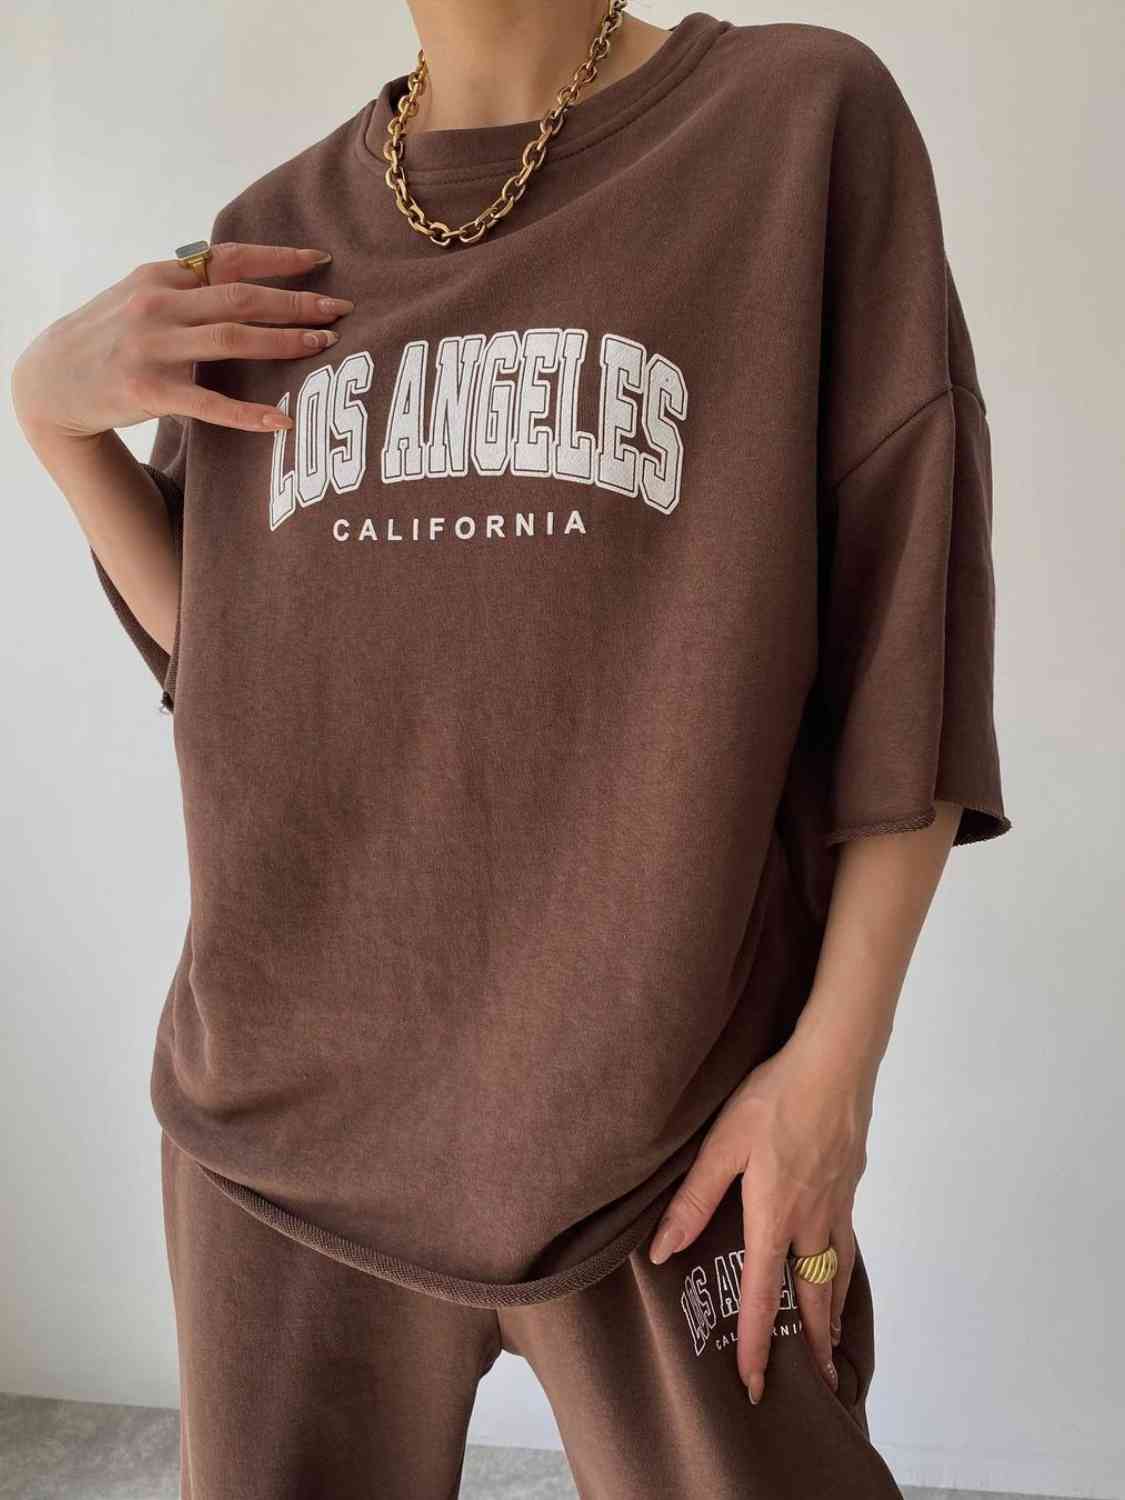 LOS ANGELES CALIFORNIA Graphic Sweatshirt and Sweatpants Set Shapelust